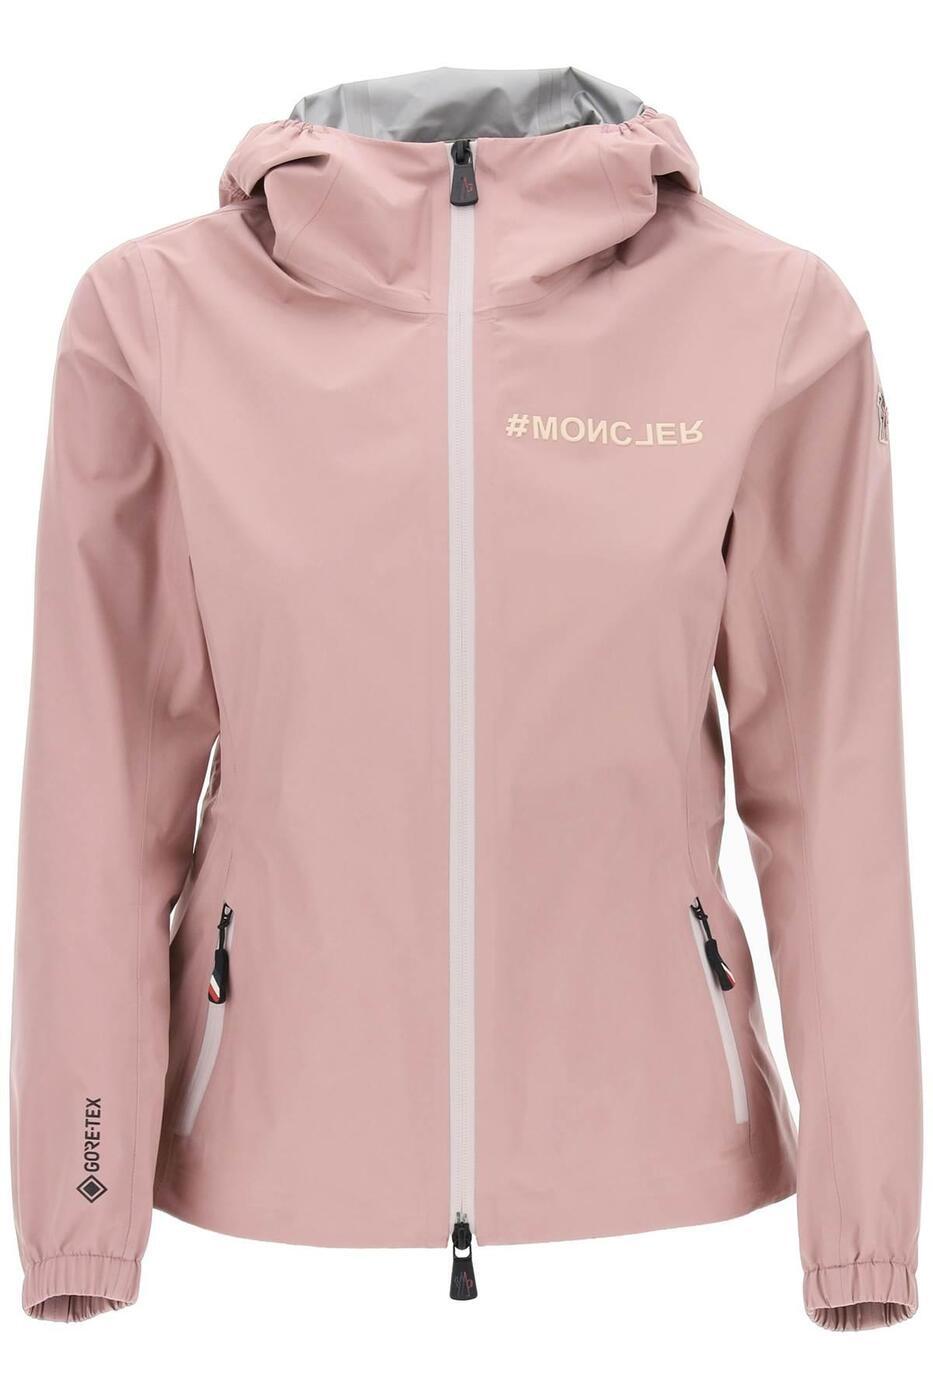 MONCLER GRENOBLE モンクレール グルーノーブス ピンク Pink ジャケット レディース 8165960581269 【関税・送料無料】【ラッピング無料】 ba